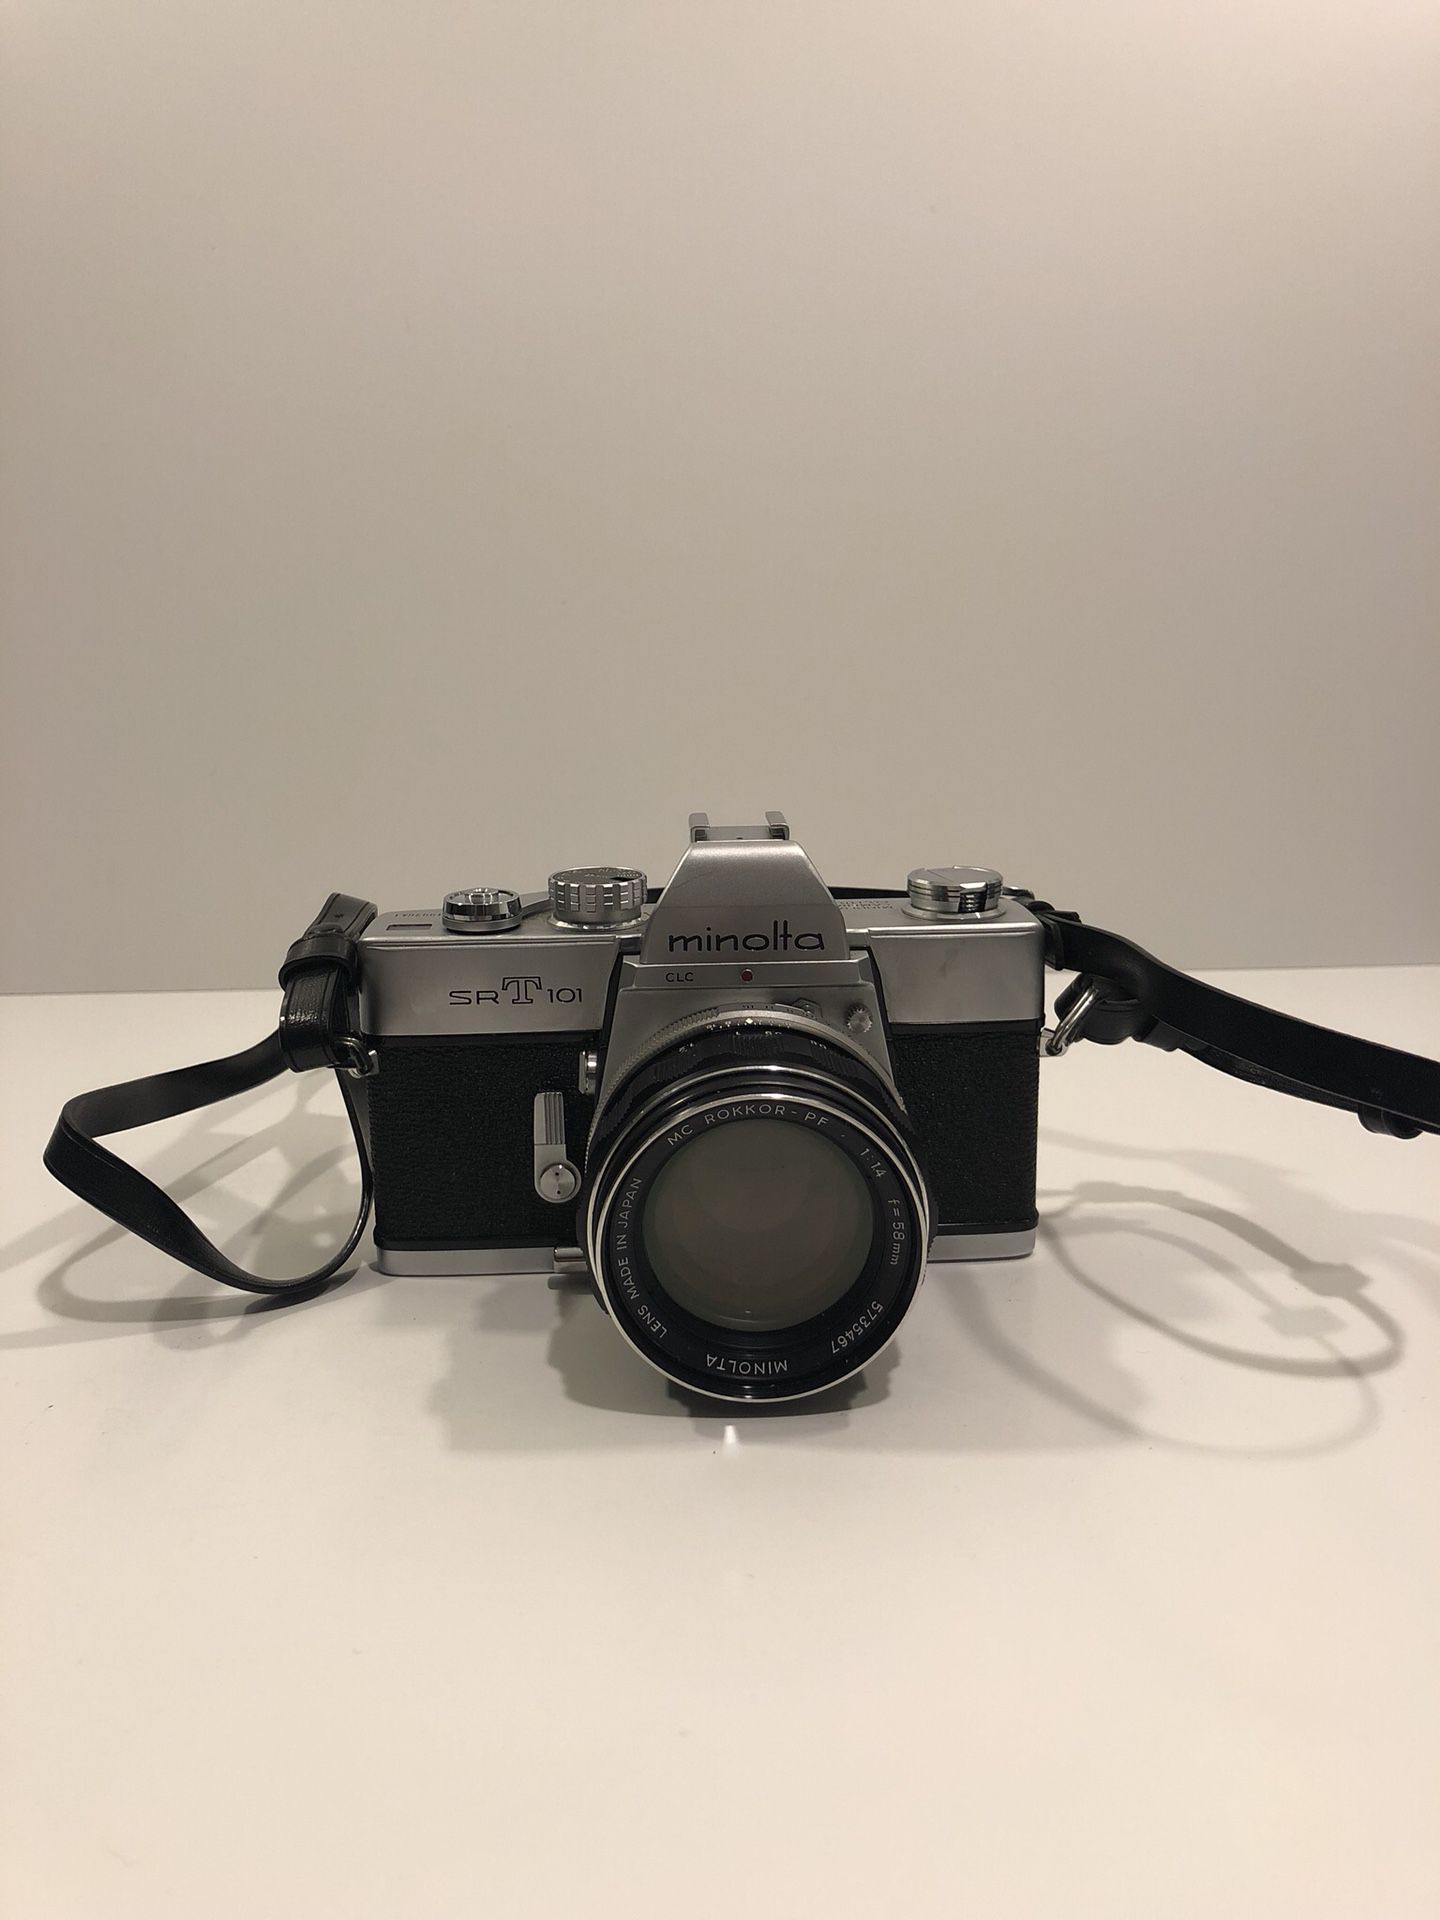 Minolta SRT 101 35mm film camera